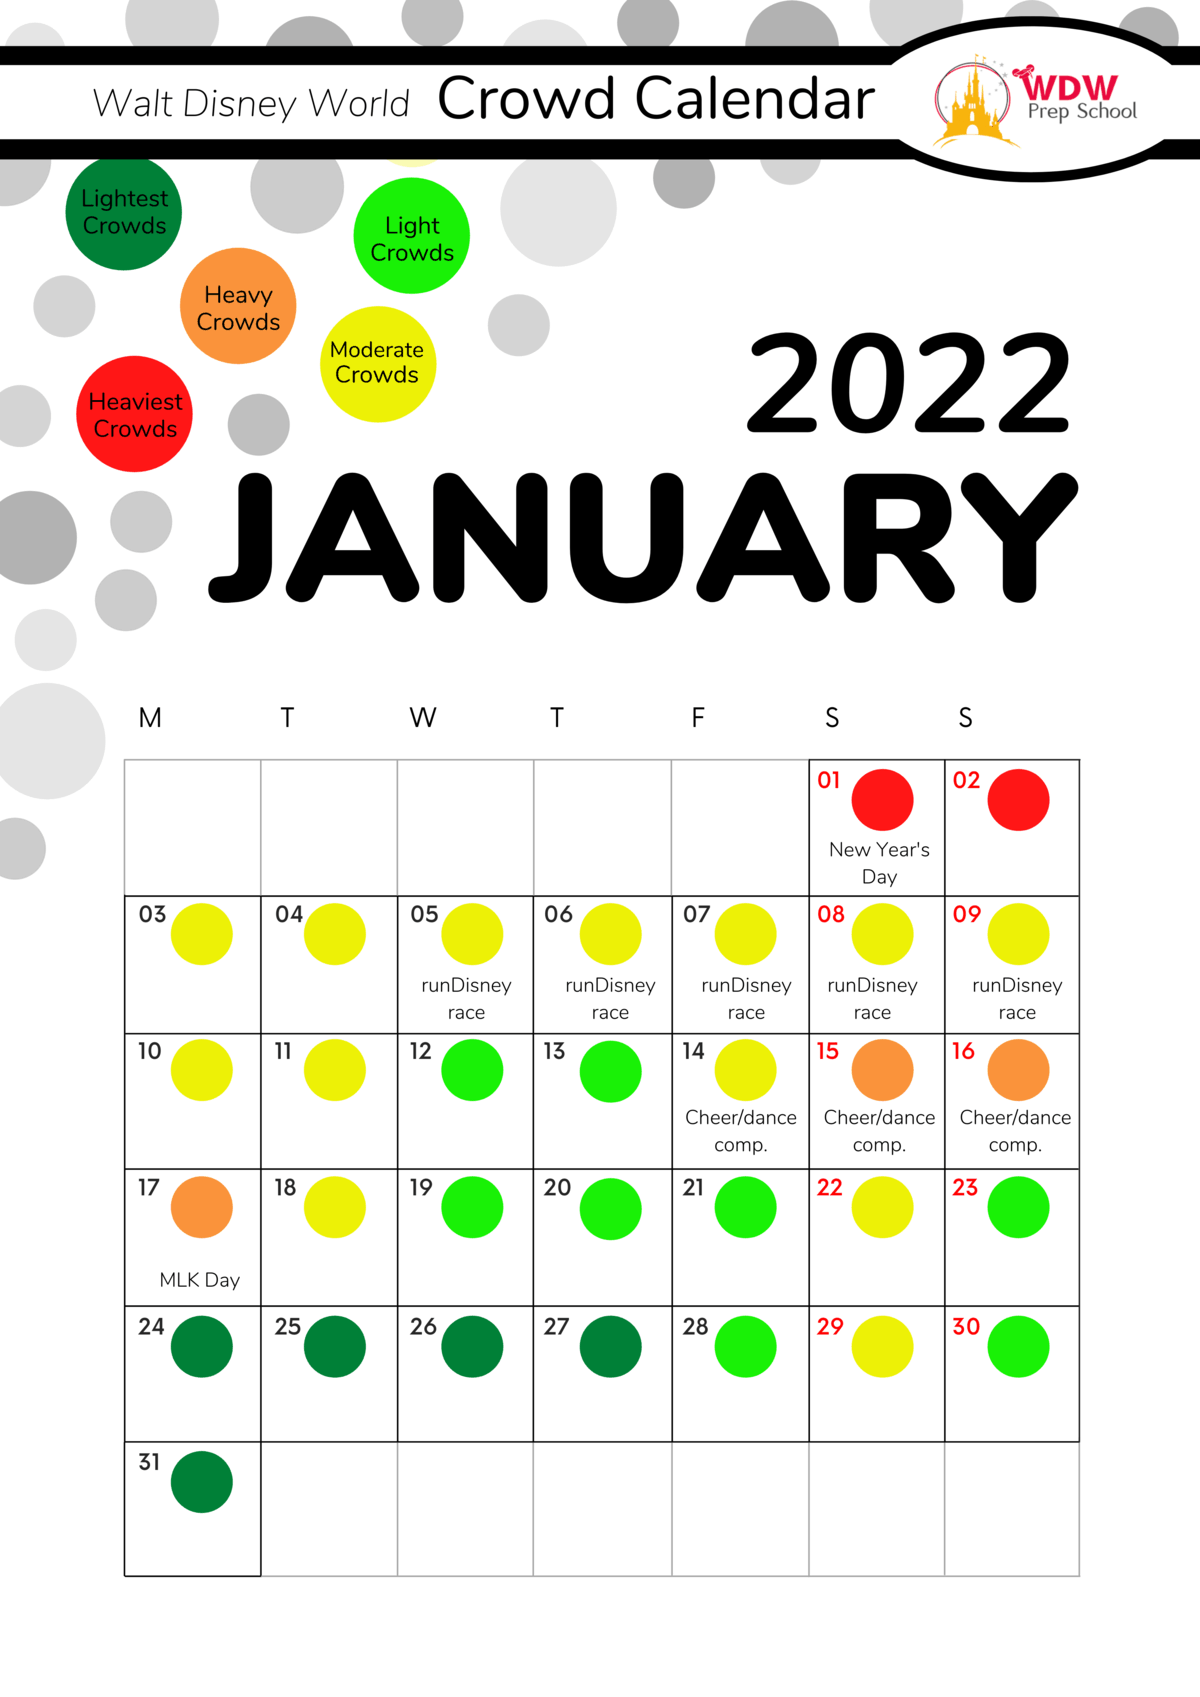 Disney World Crowd Calendar 2022 By Park Disney World 2022 Crowd Calendar (Best Times To Go)